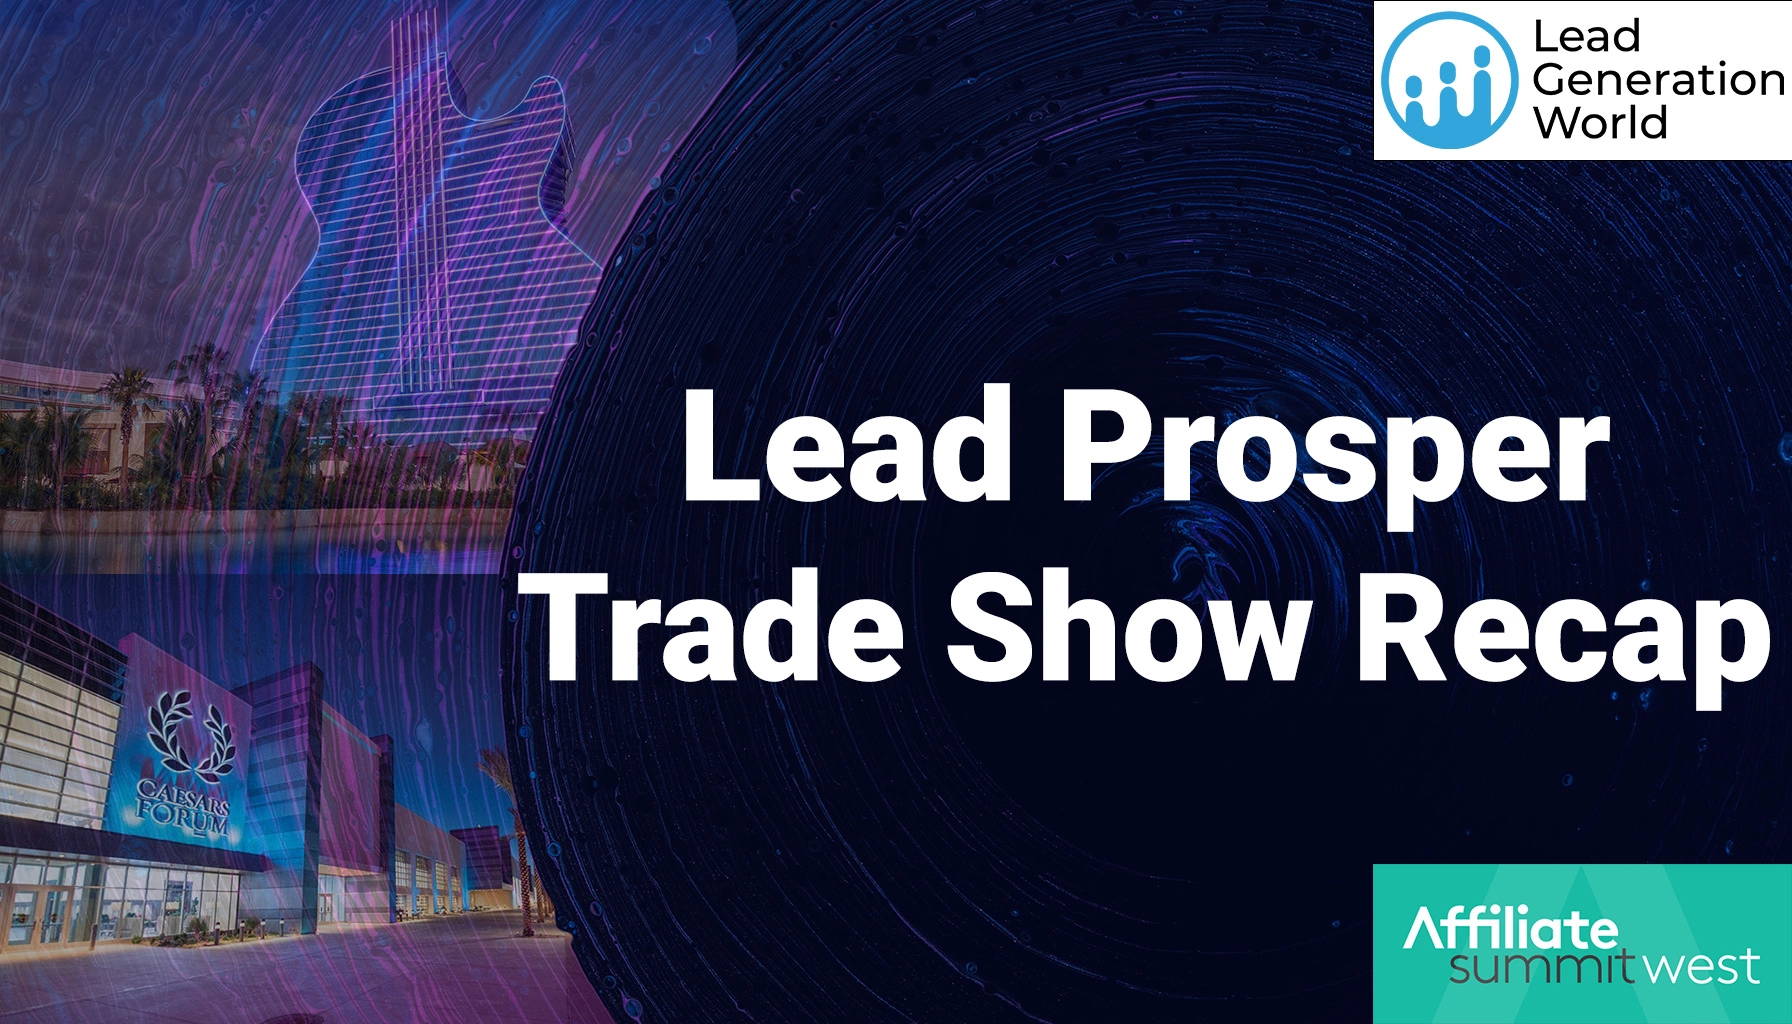 Lead Prosper Trade Show Recap: Lead Generation World and Affiliate Summit West 2024